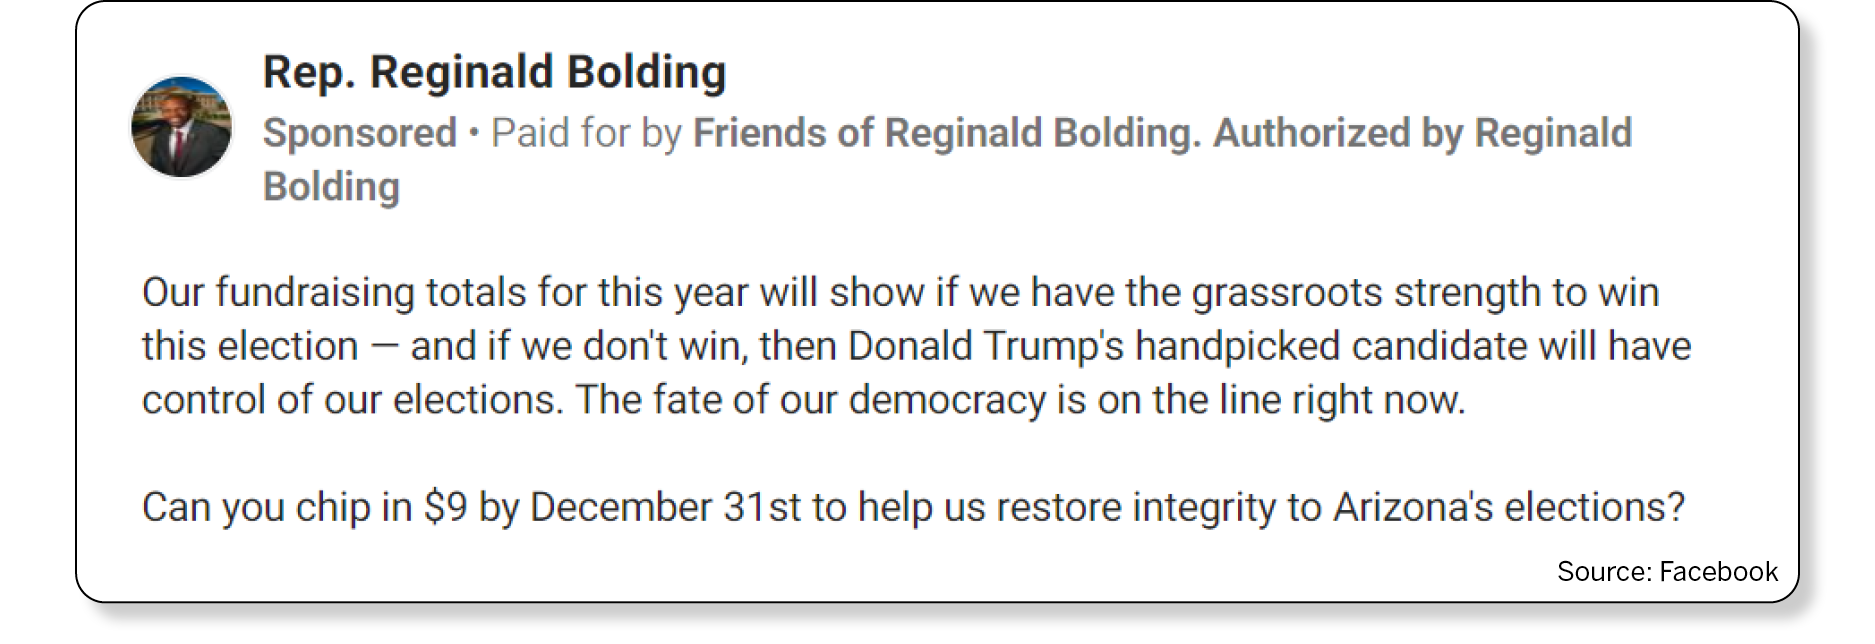 Screenshot of Reginald Bolding Facebook ad